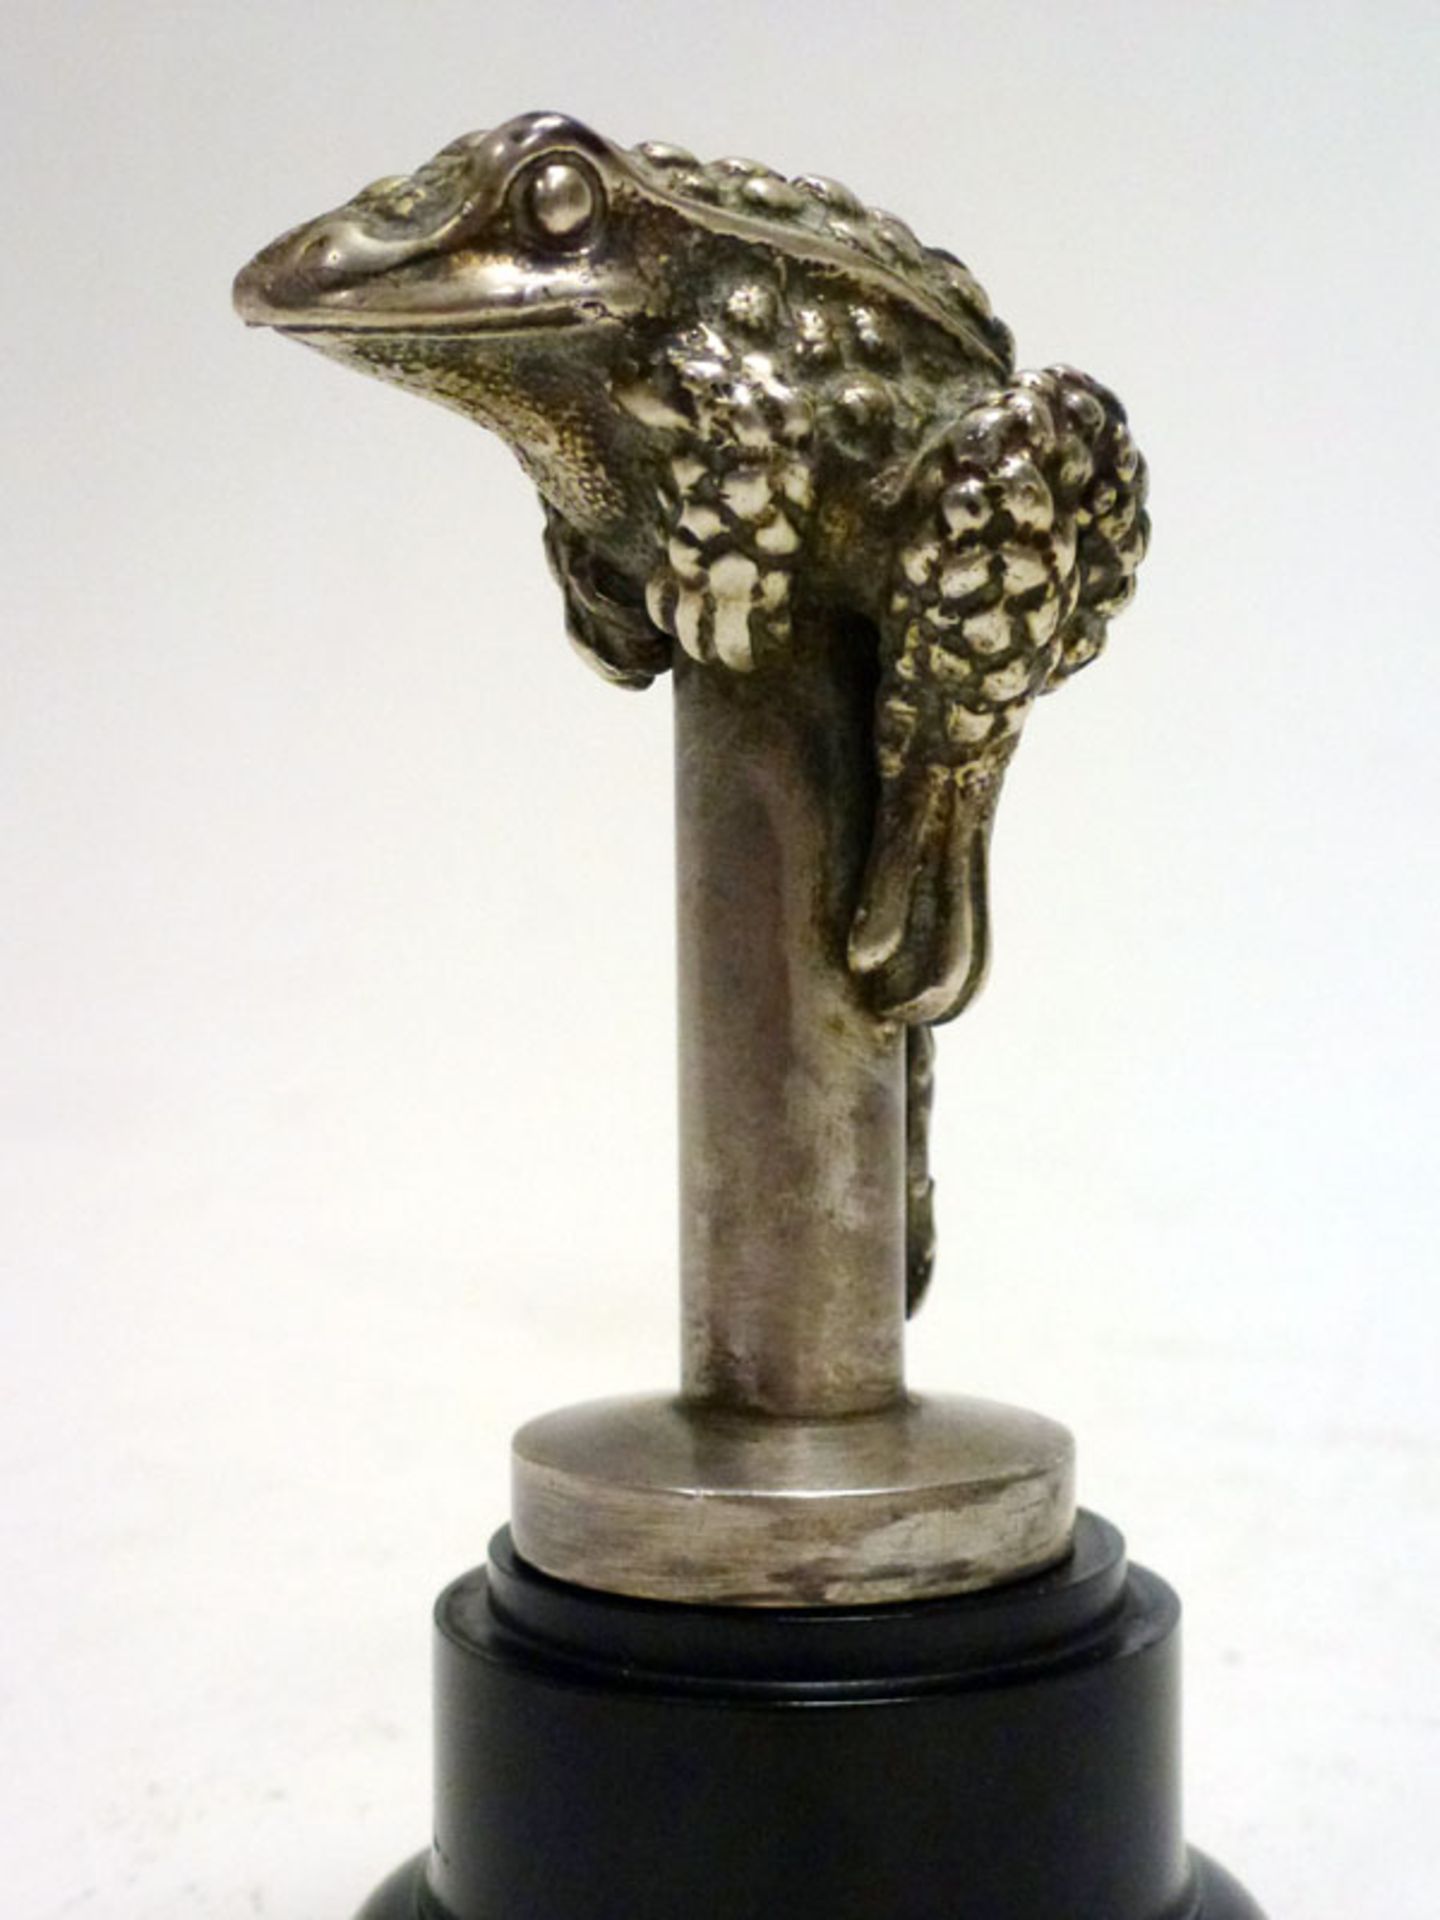 Toad on a Pillar' Accessory Mascot